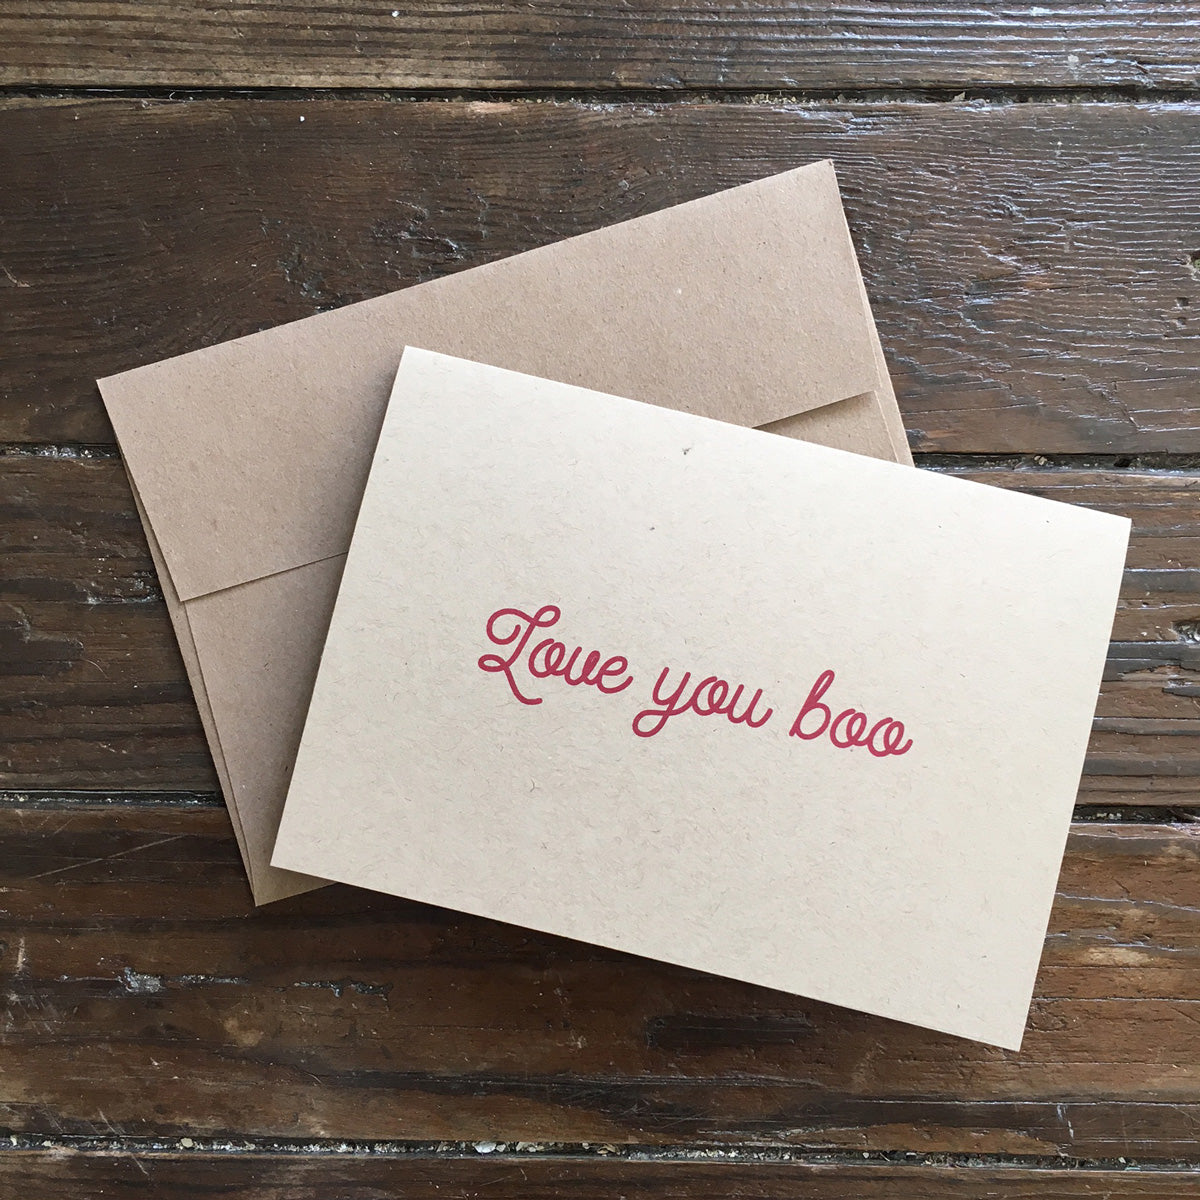 Love you boo - Greeting Card